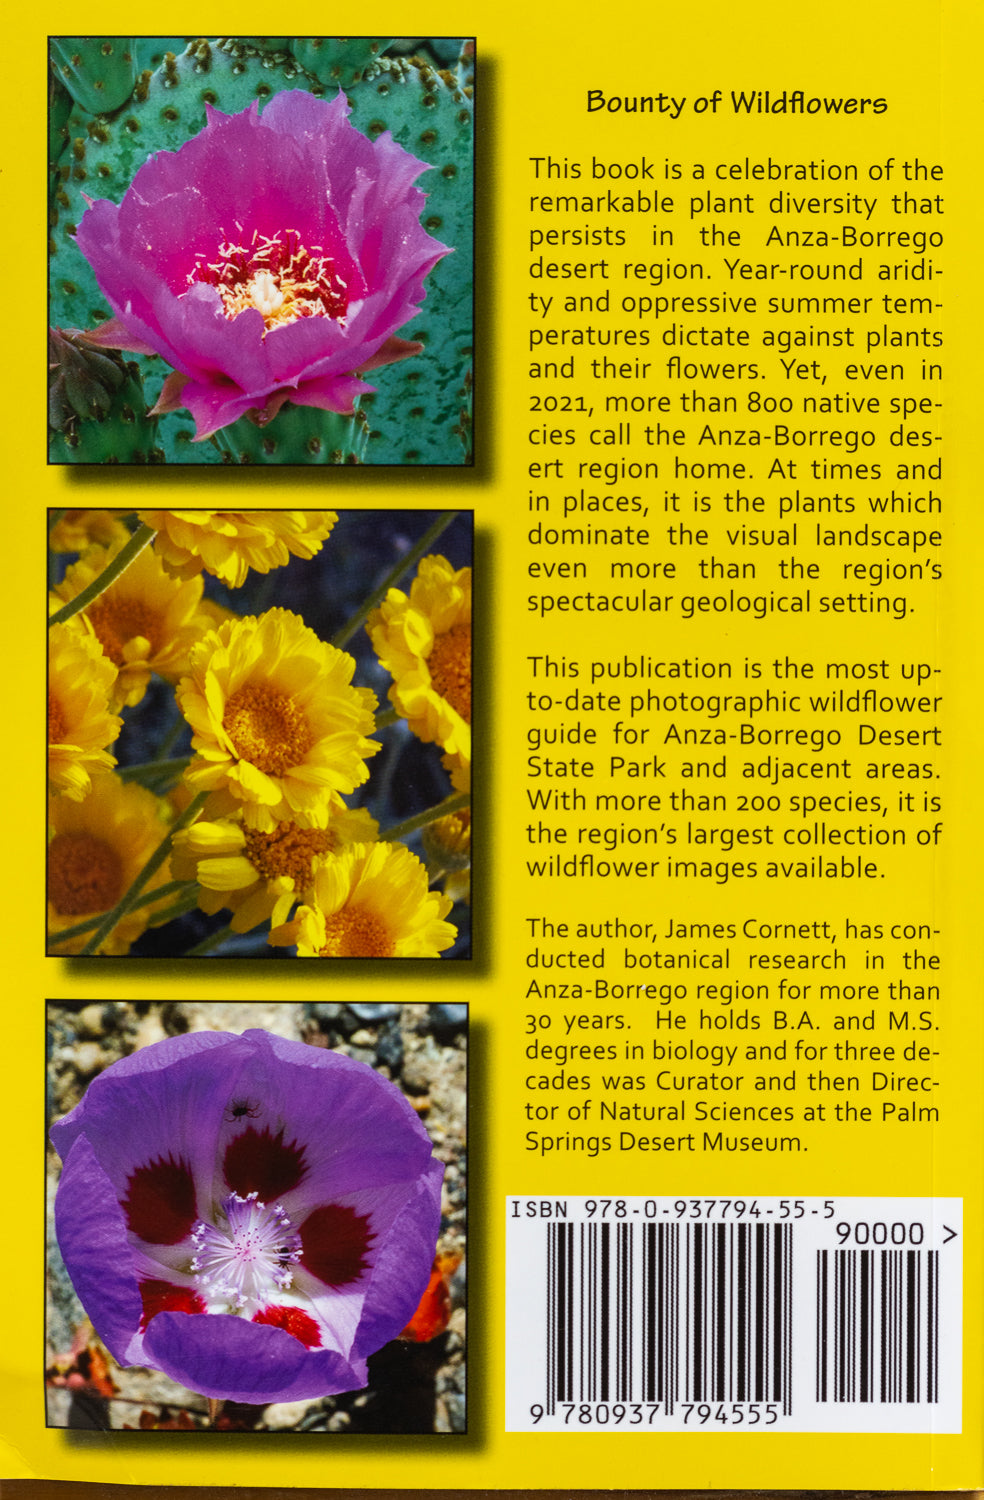 Wildflowers of Anza-Borrego Paperback – January 1, 2020 - James W. Cornett (Author)